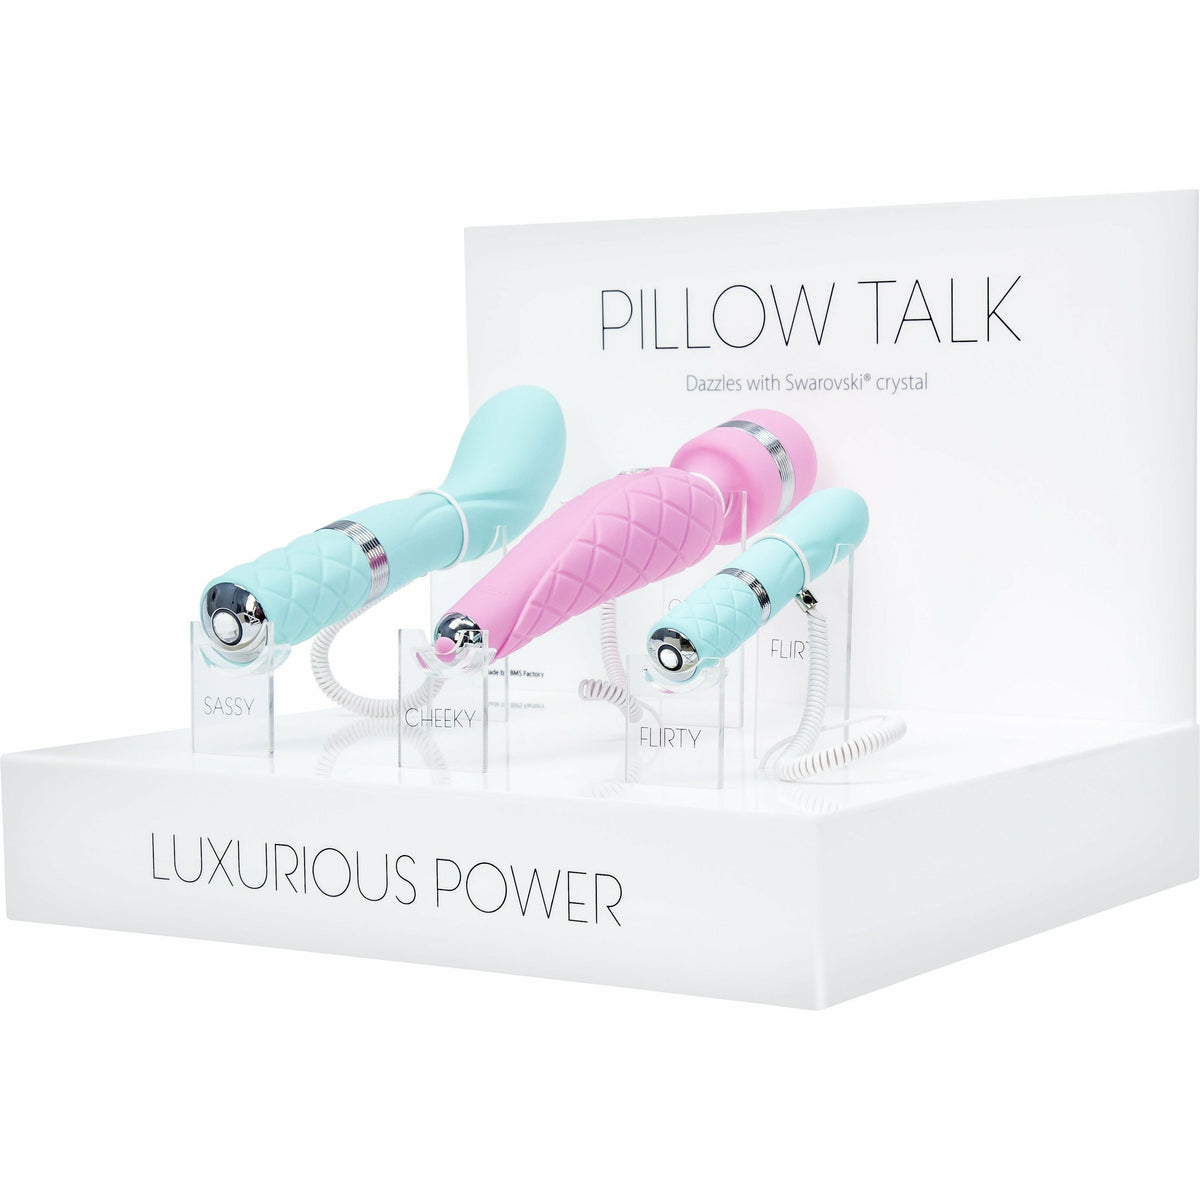 Pillow Talk Counter Display (Sassy, Cheeky and Flirty)